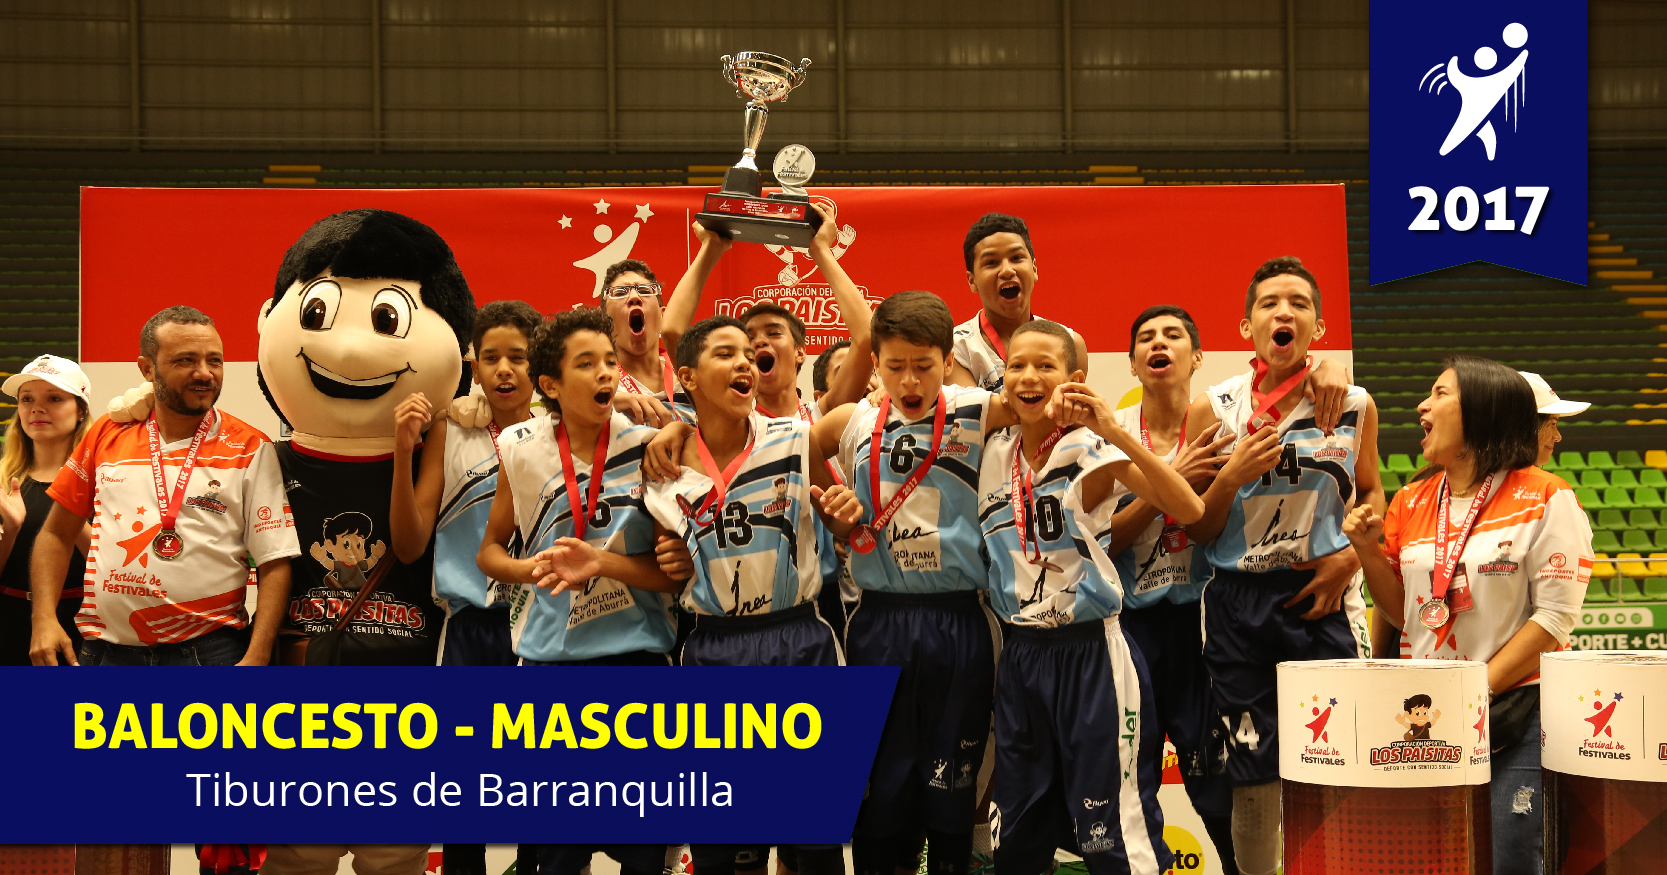 Baloncesto Masculino – Tiburones de Barranquilla